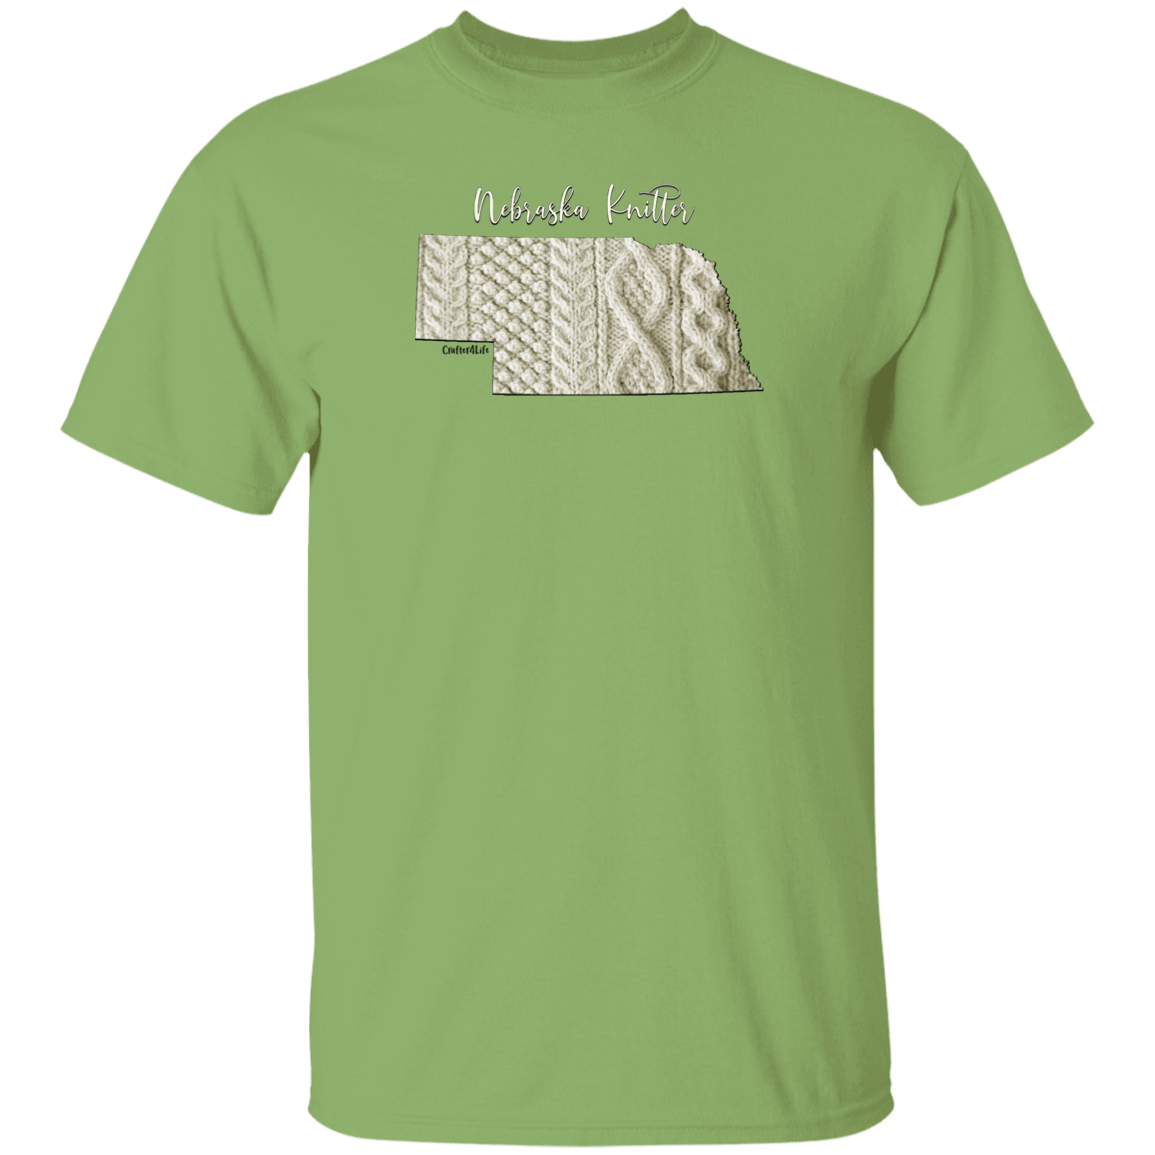 Nebraska Knitter Cotton T-Shirt